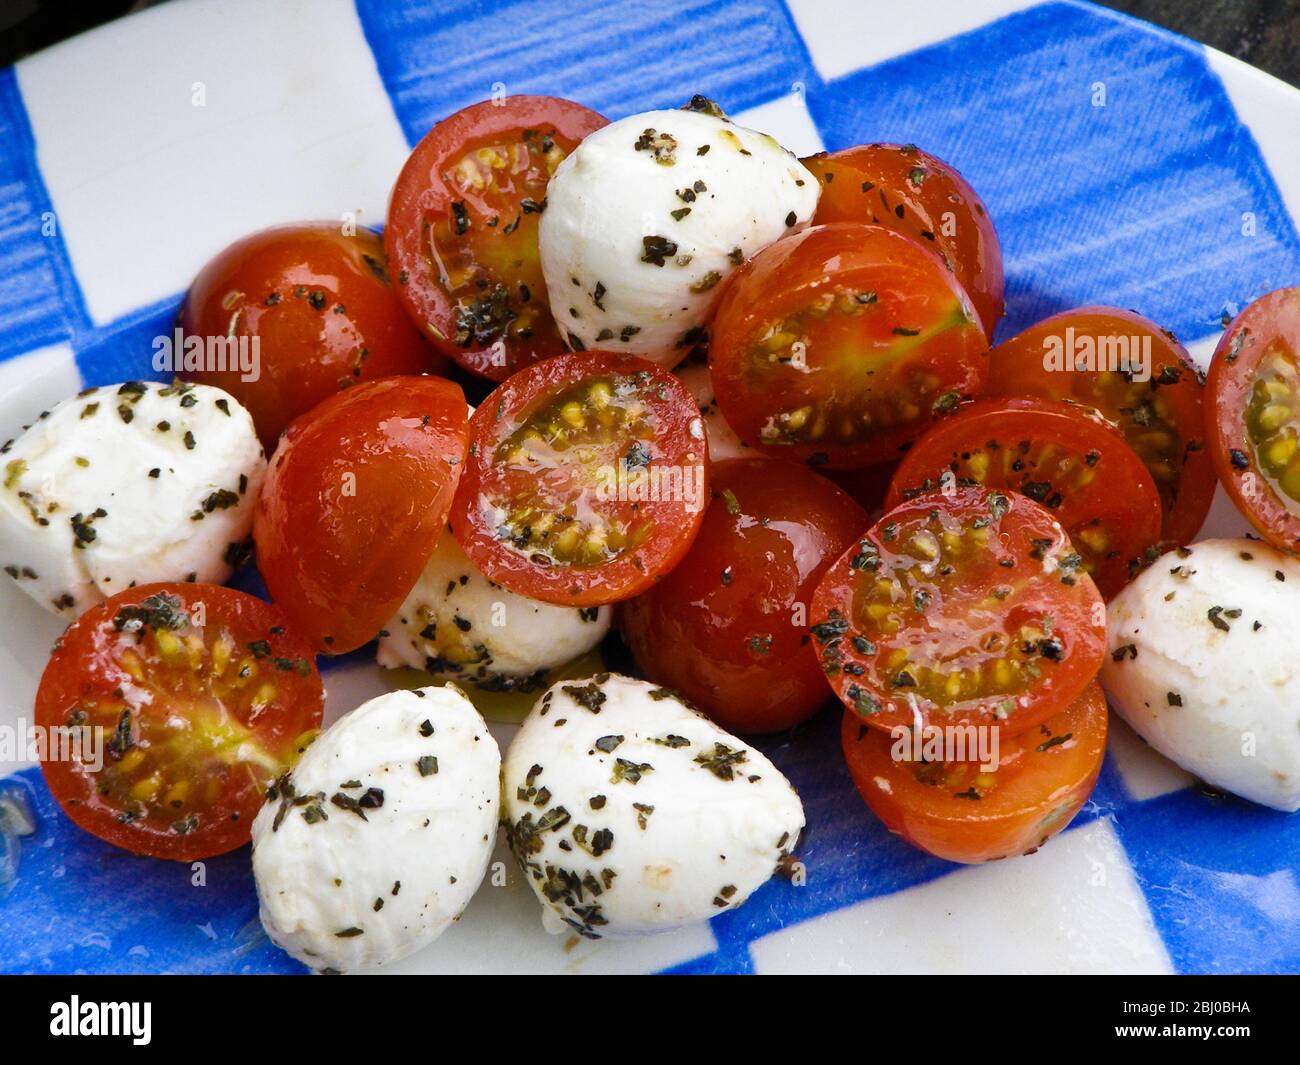 Salat aus Mozzarella-Kugeln mit Kirschtomaten in Öl, Essig und Kräuterdressing. - Stockfoto